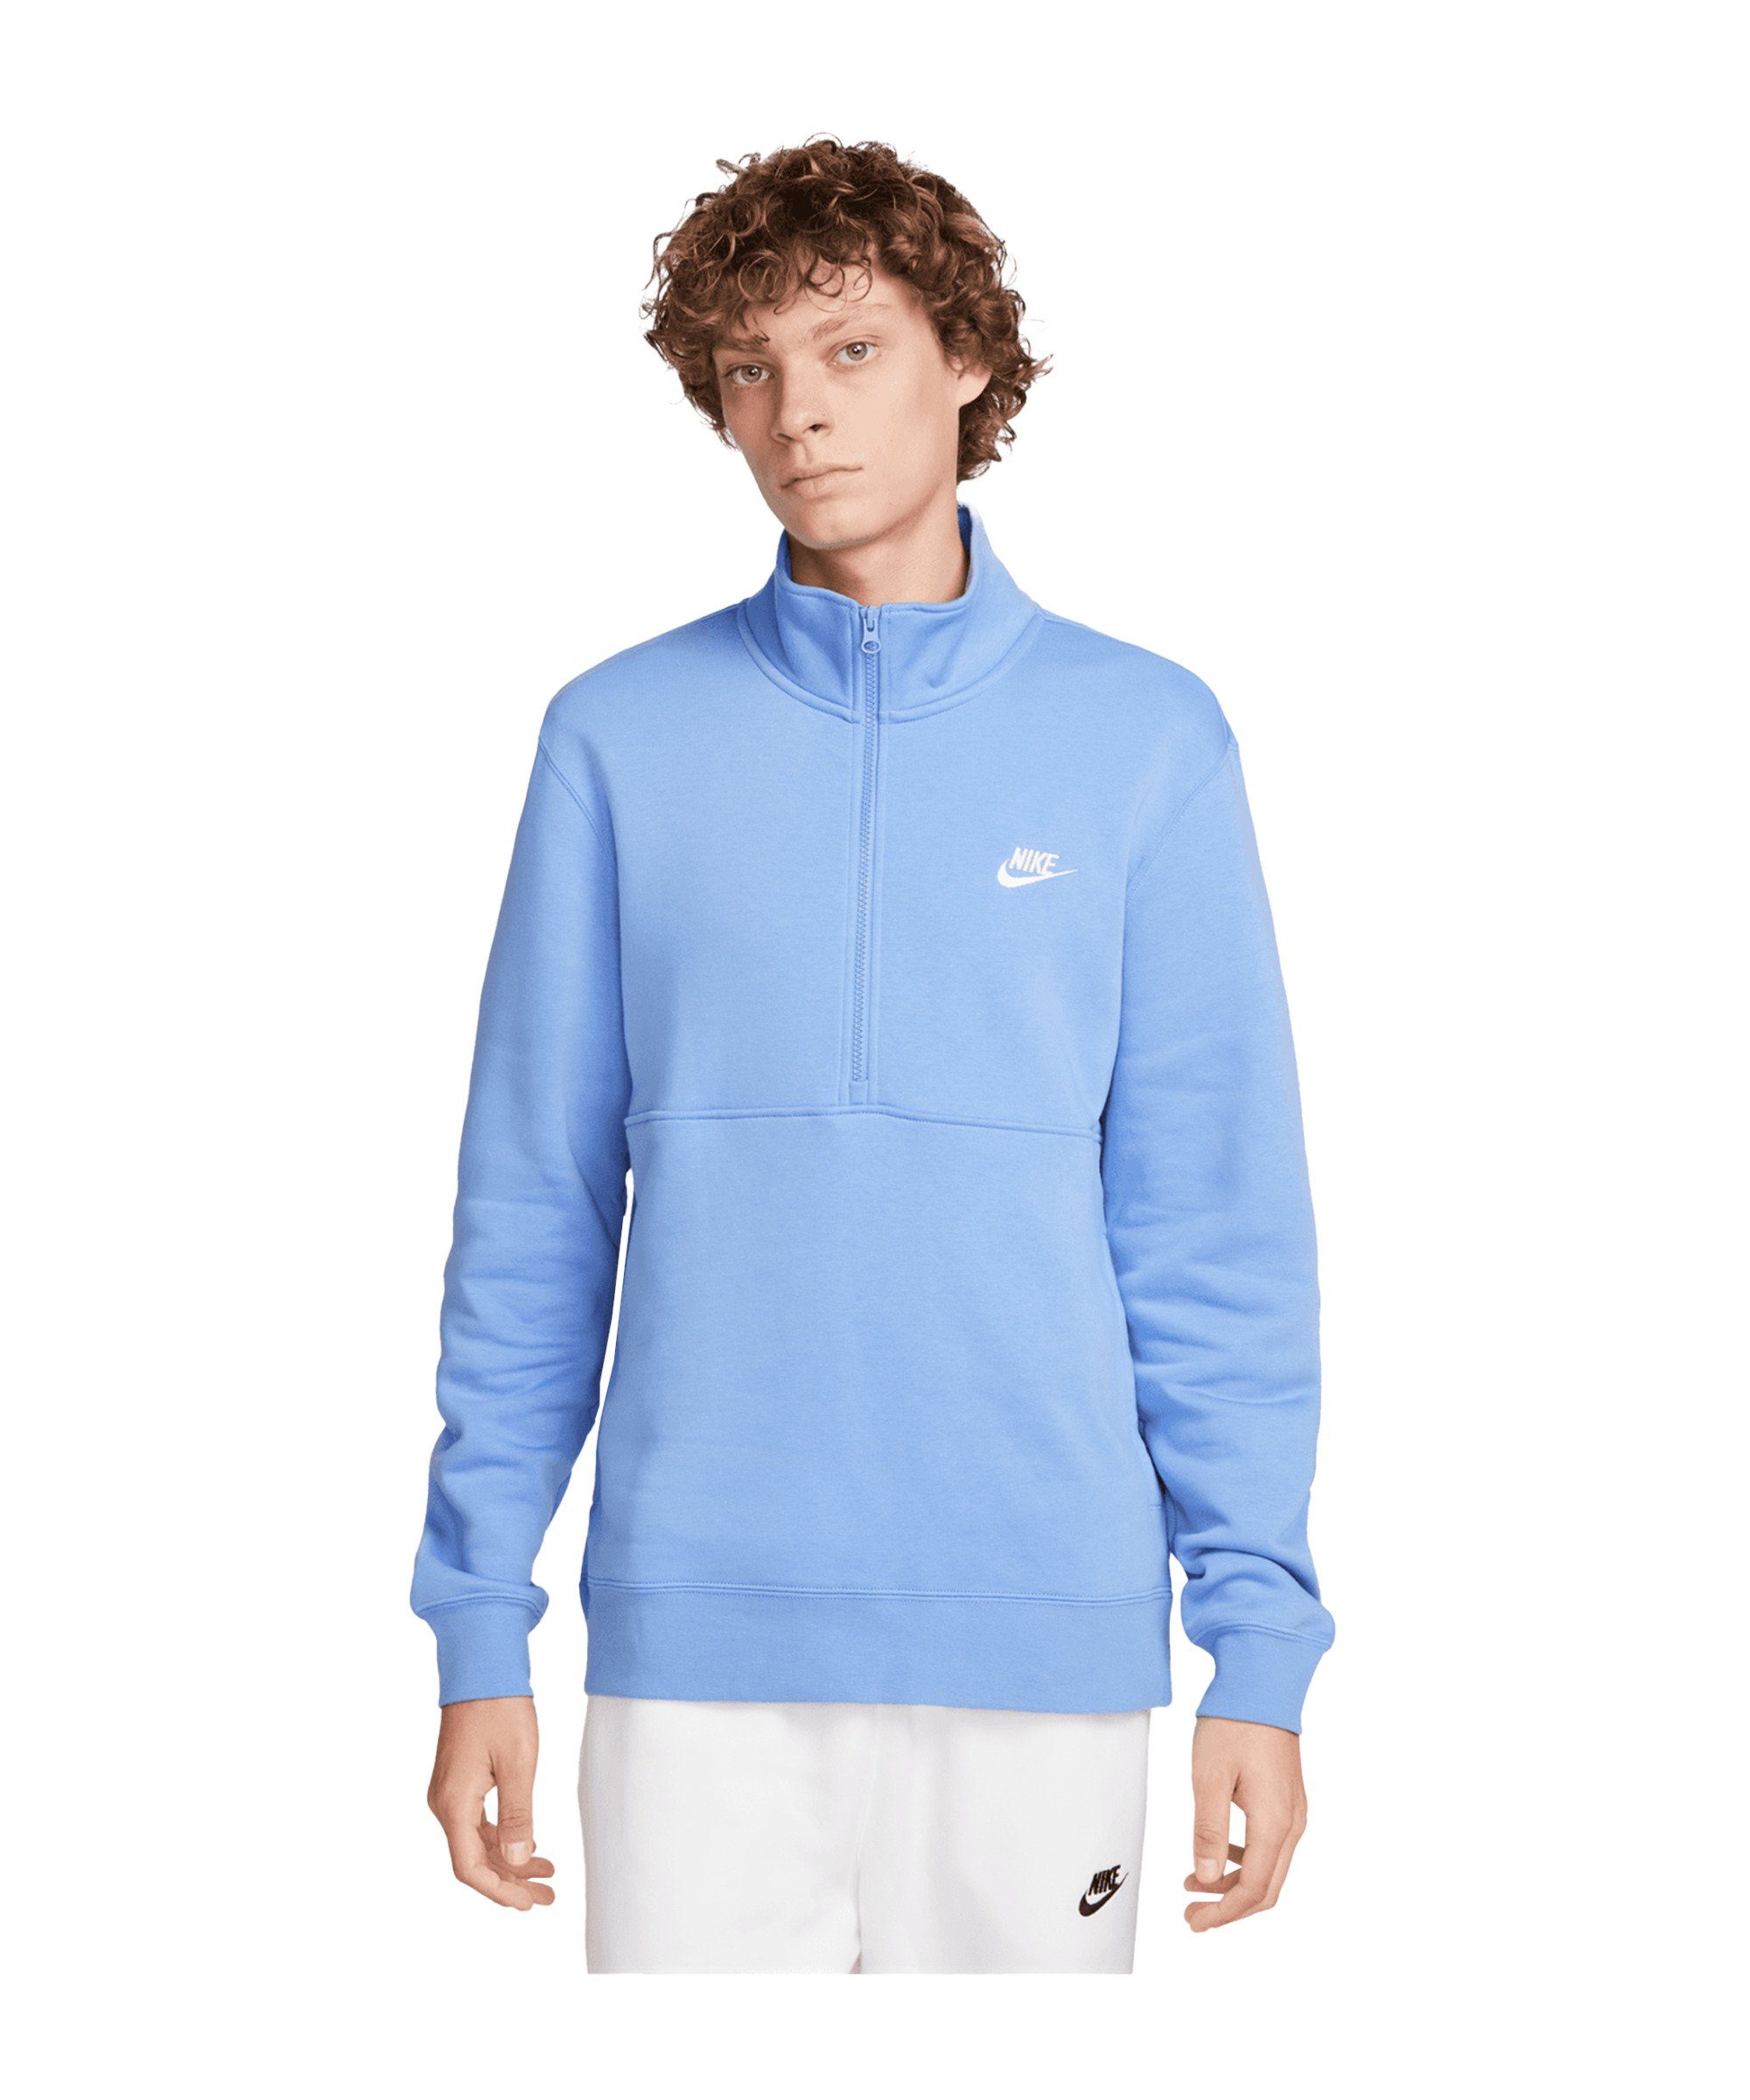 Nike Sportswear Sweatshirt Club HalfZip Sweatshirt blaublauweiss | Sweatshirts